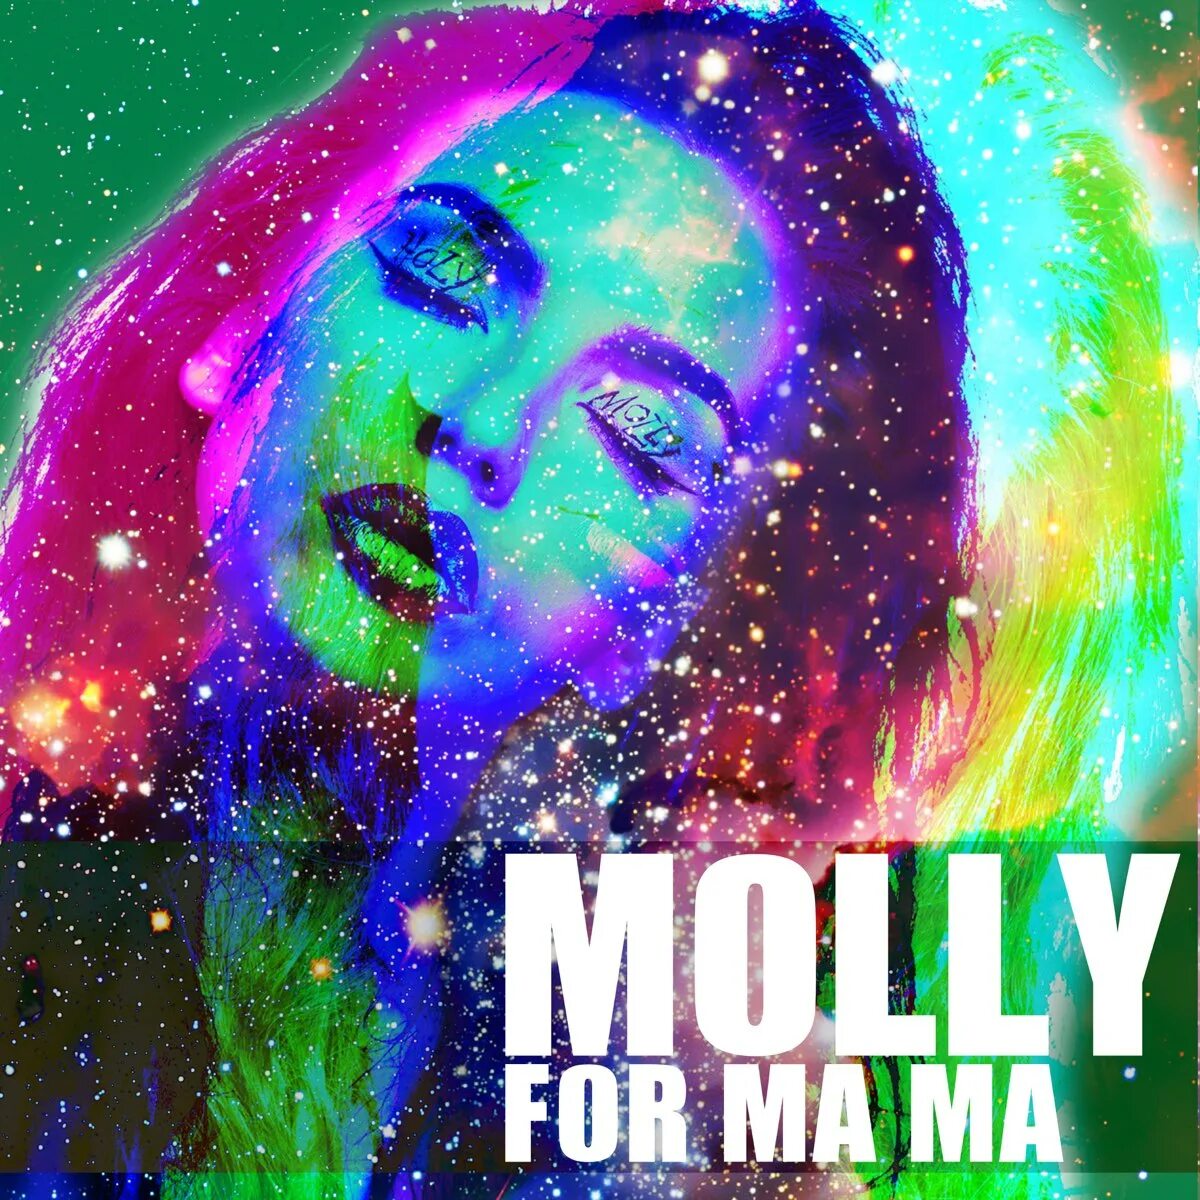 Ma ma ma maria. Molly обложка. Молли альбом. Molly обложка альбома. Molly for mama.